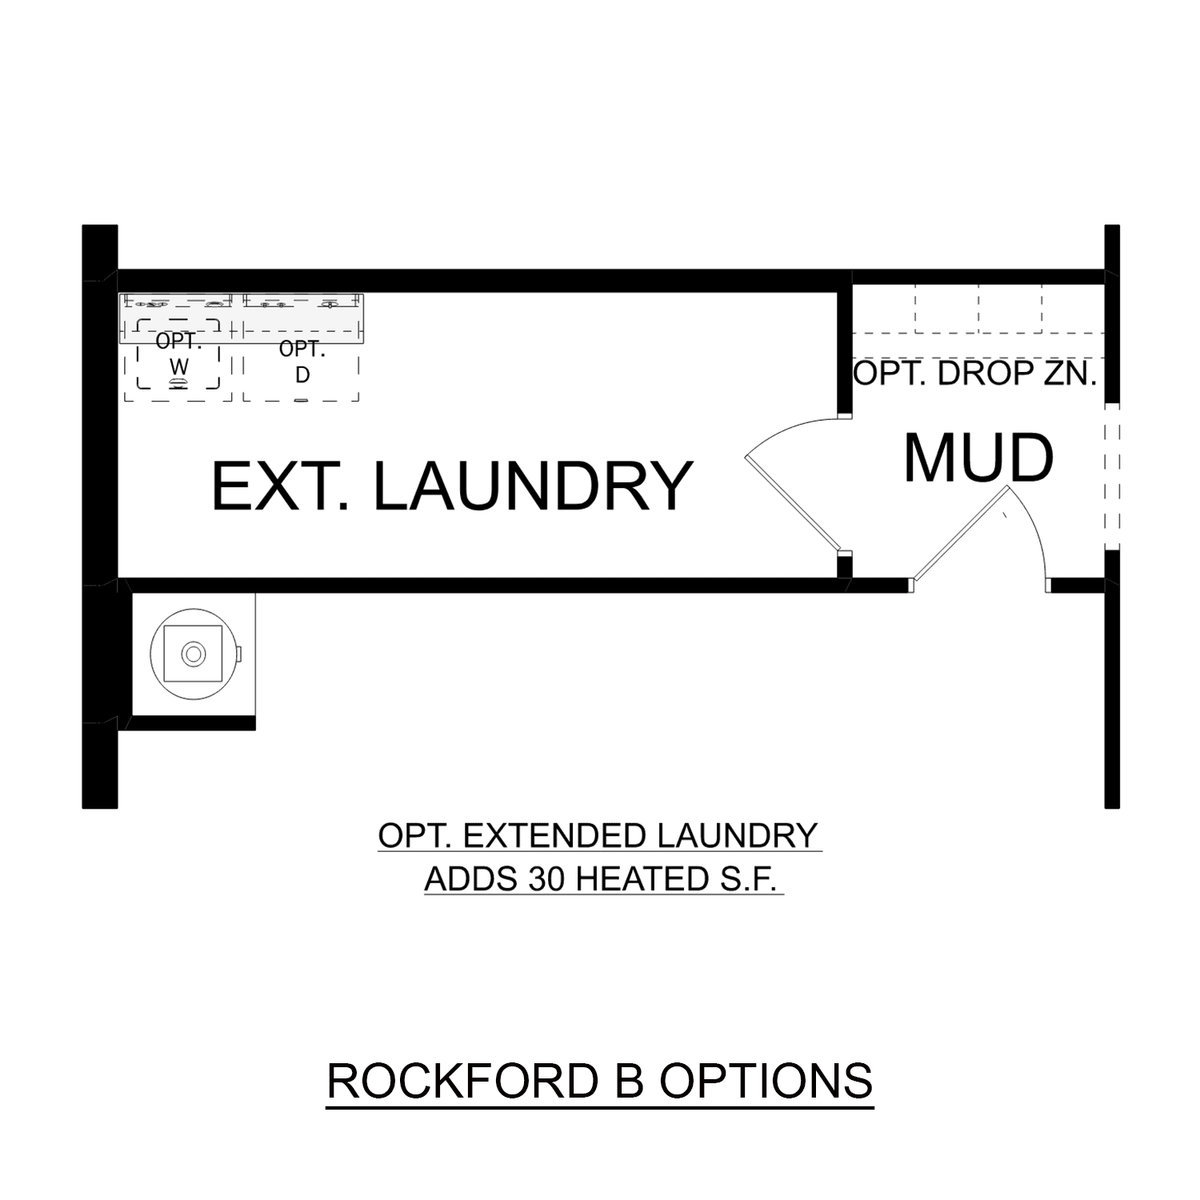 2 - The Rockford B floor plan layout for 2070 Austin Dr in Davidson Homes' North Ridge community.